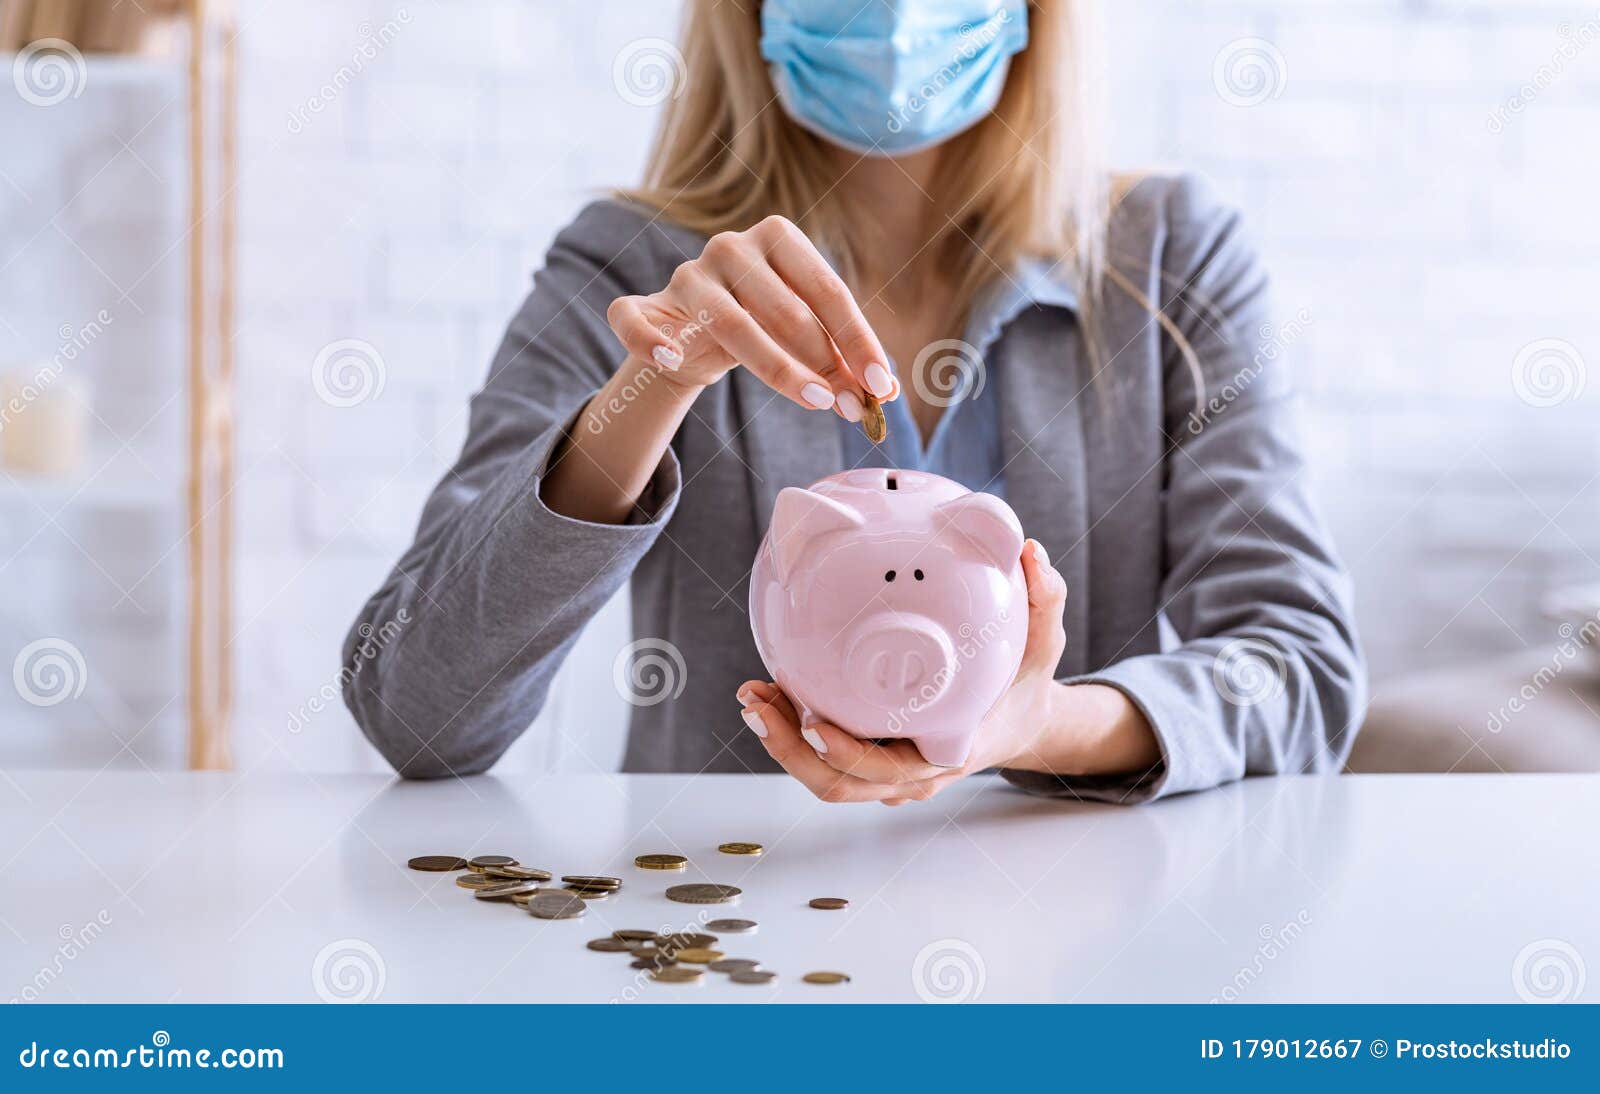 unemployment during epidemic. woman puts coins into piggy bank